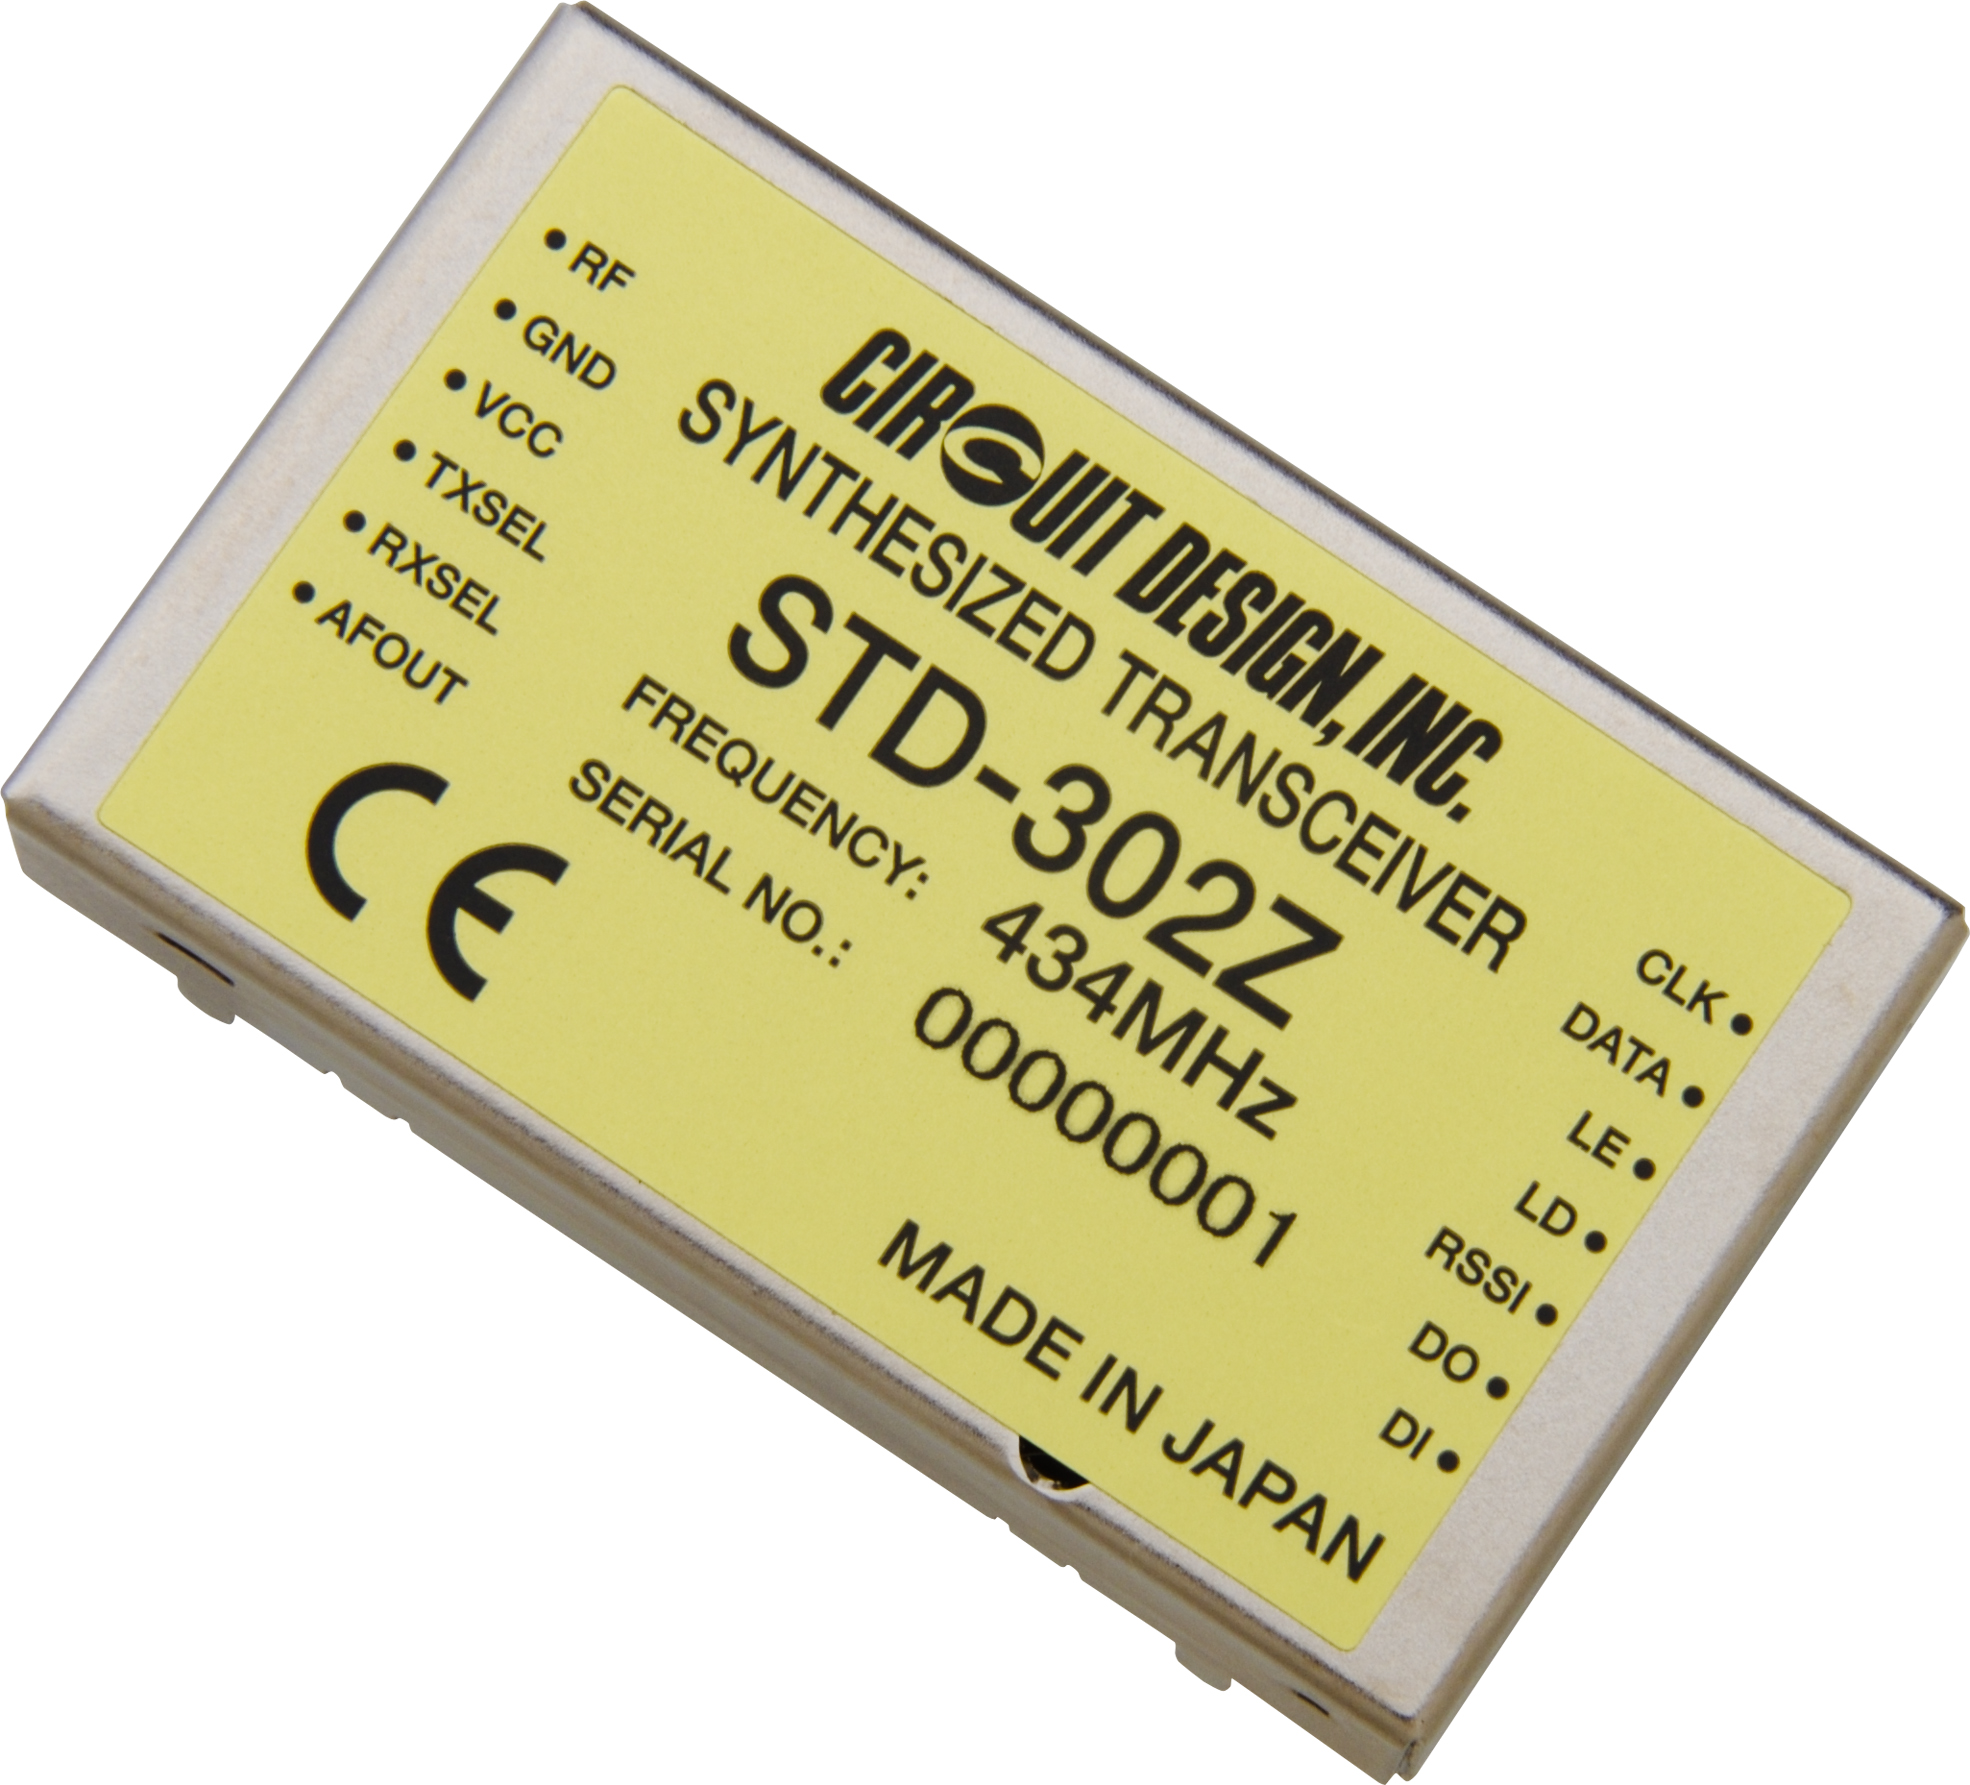 Saelig Companys STD-302Z 434MHz narrow-band multi-channel transceiver 